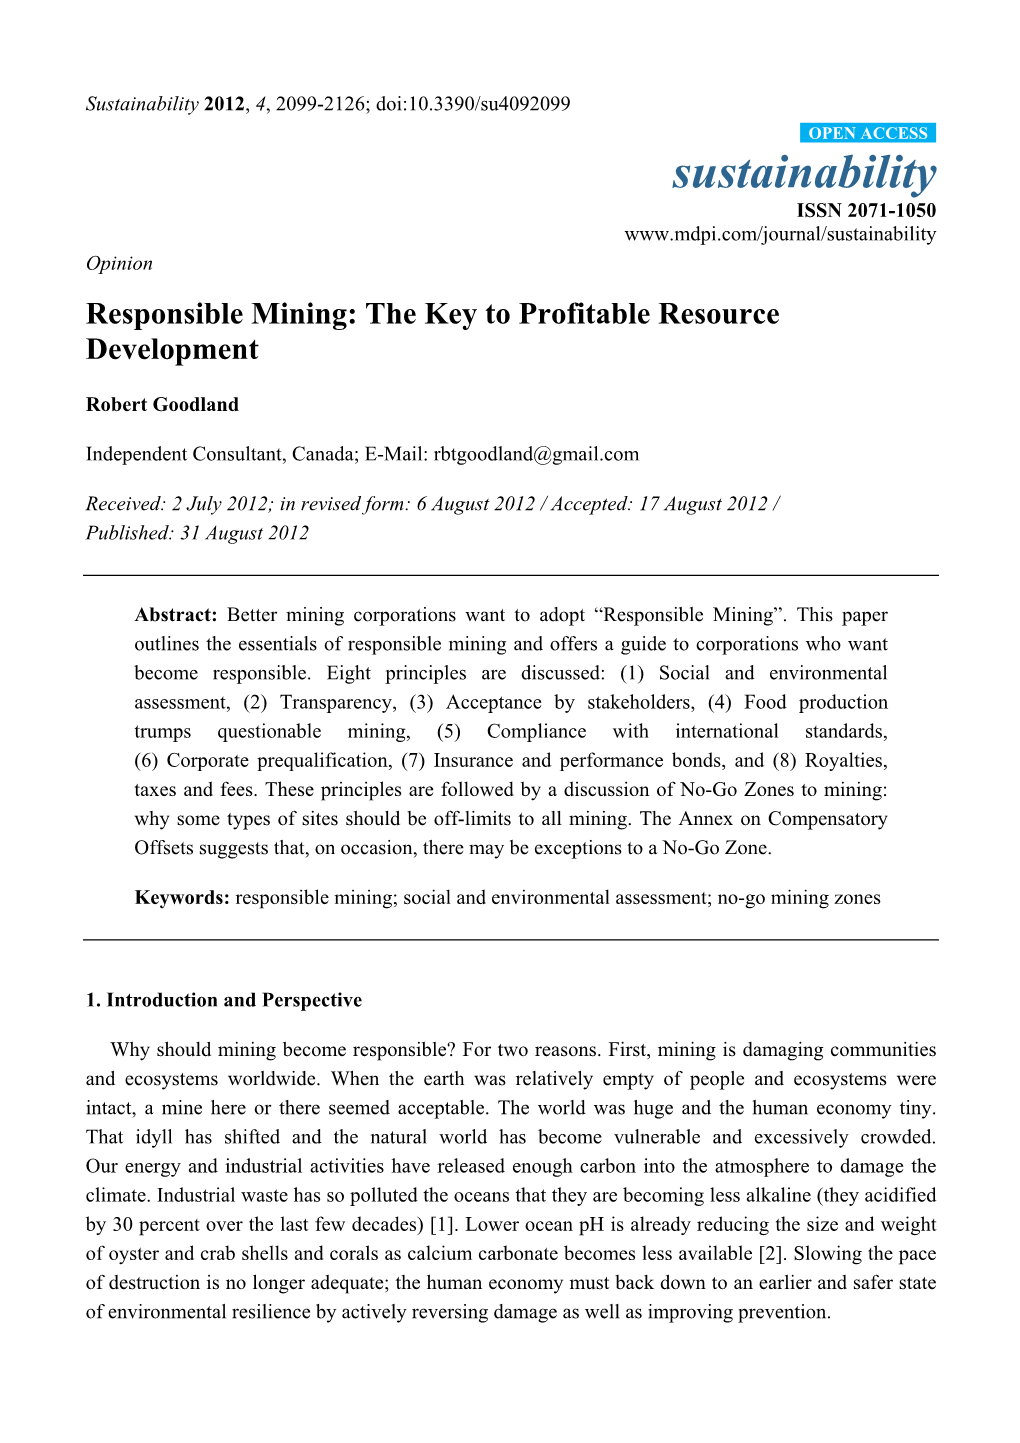 Responsible Mining: the Key to Profitable Resource Development